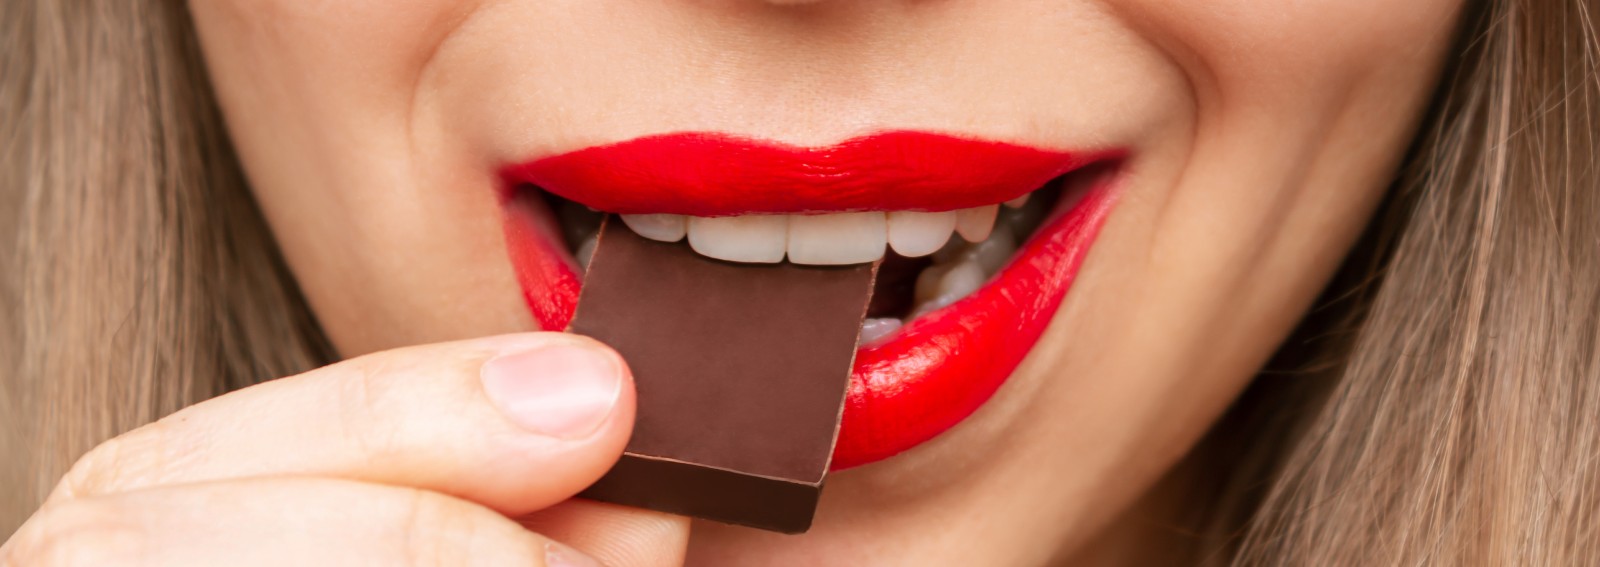 chocolate-snack-lipstick-woman-food-dark